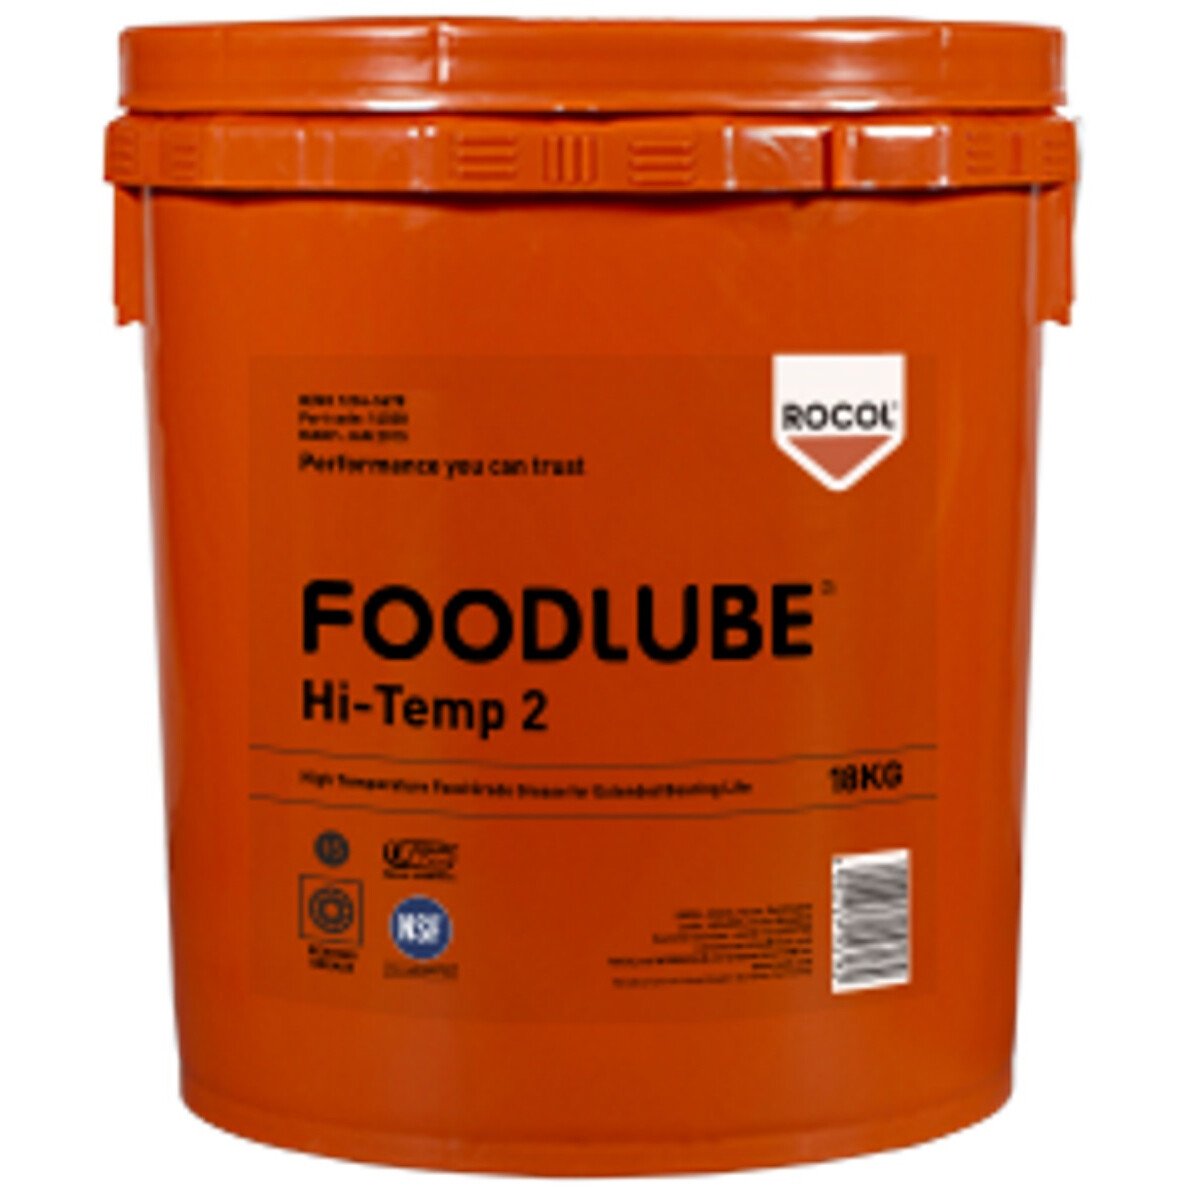 Rocol 15254 Foodlube Hi-Temp Food Grade Grease 2 (NSF Registered) 18kg